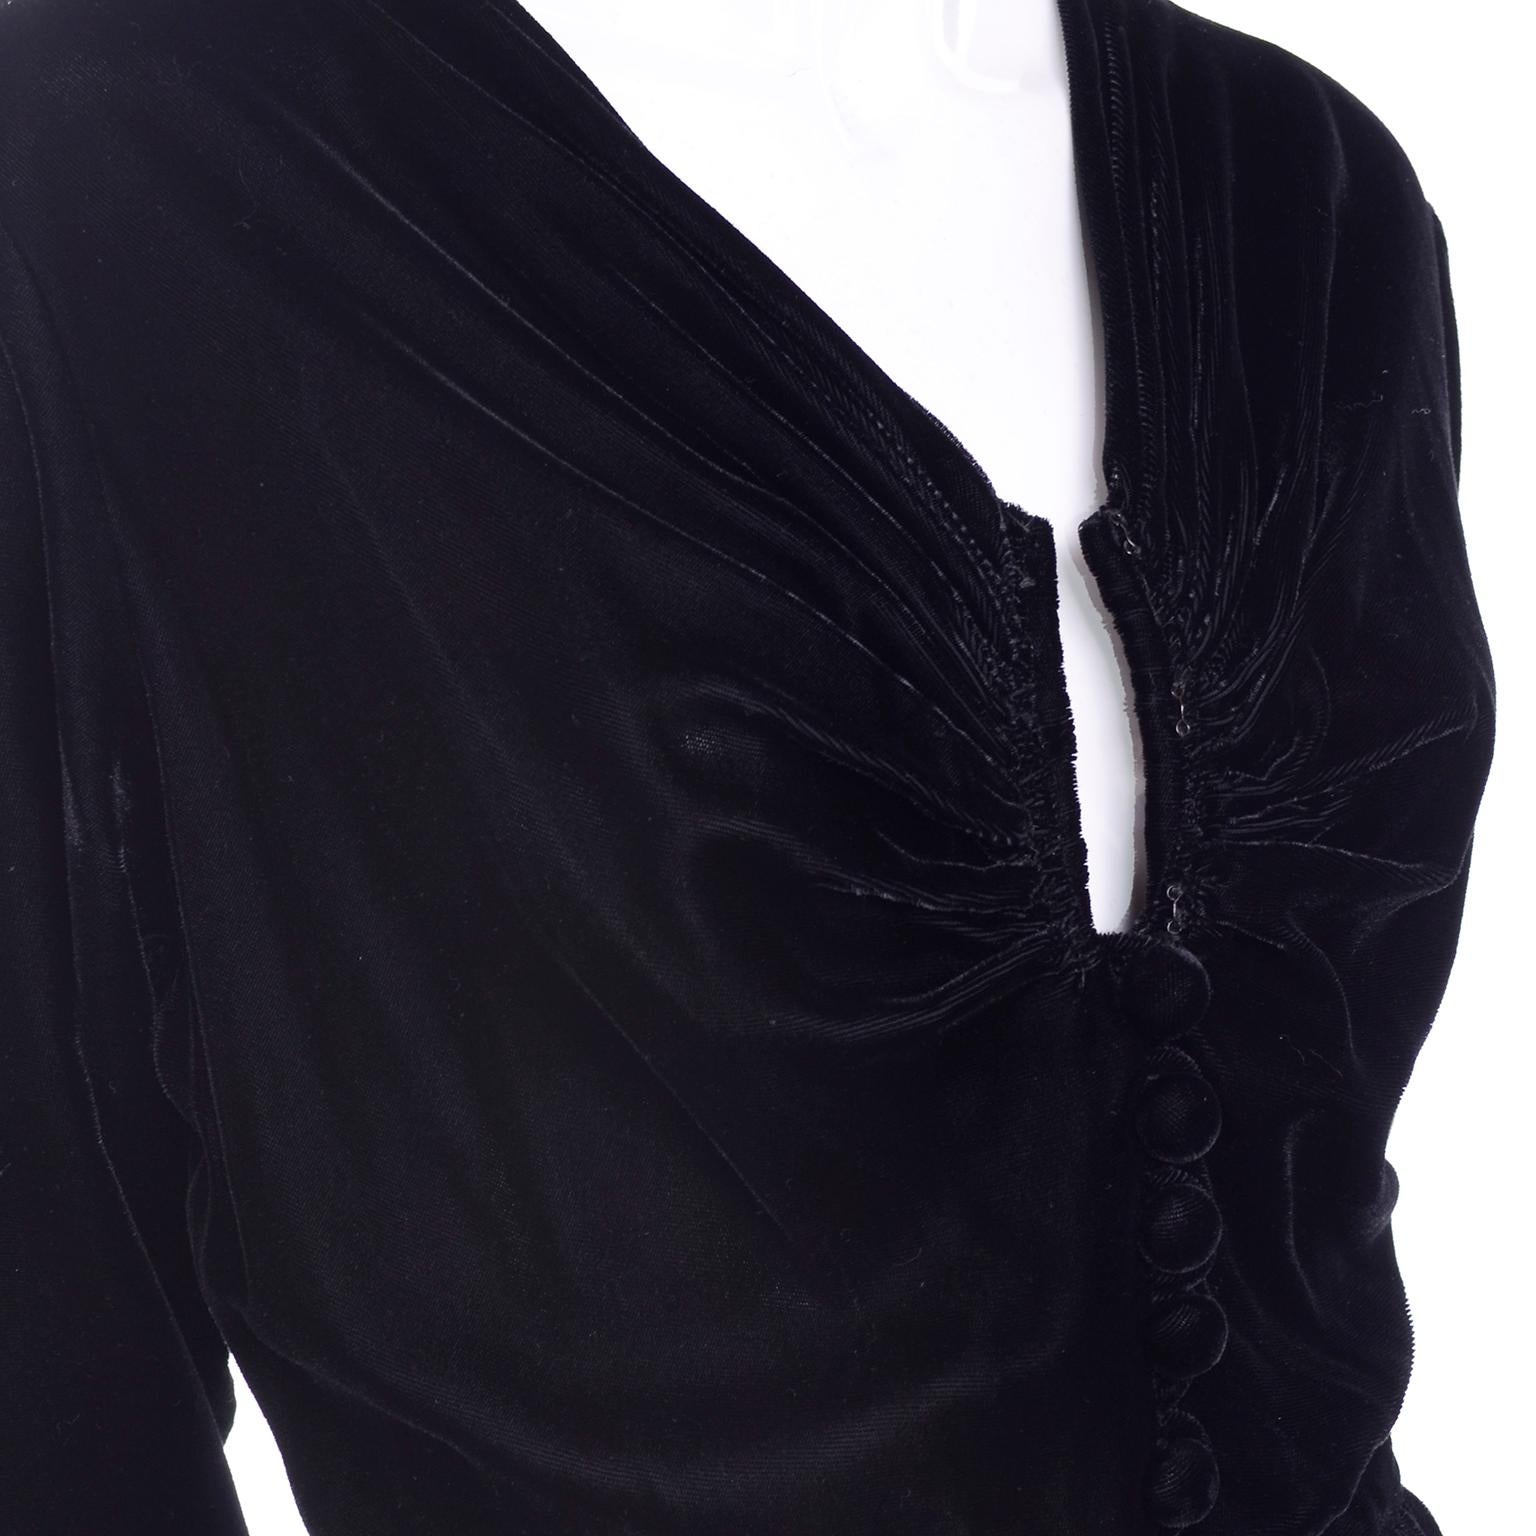 Vintage 1940s Black Velvet Evening Dress or Hostess Gown For Sale 2